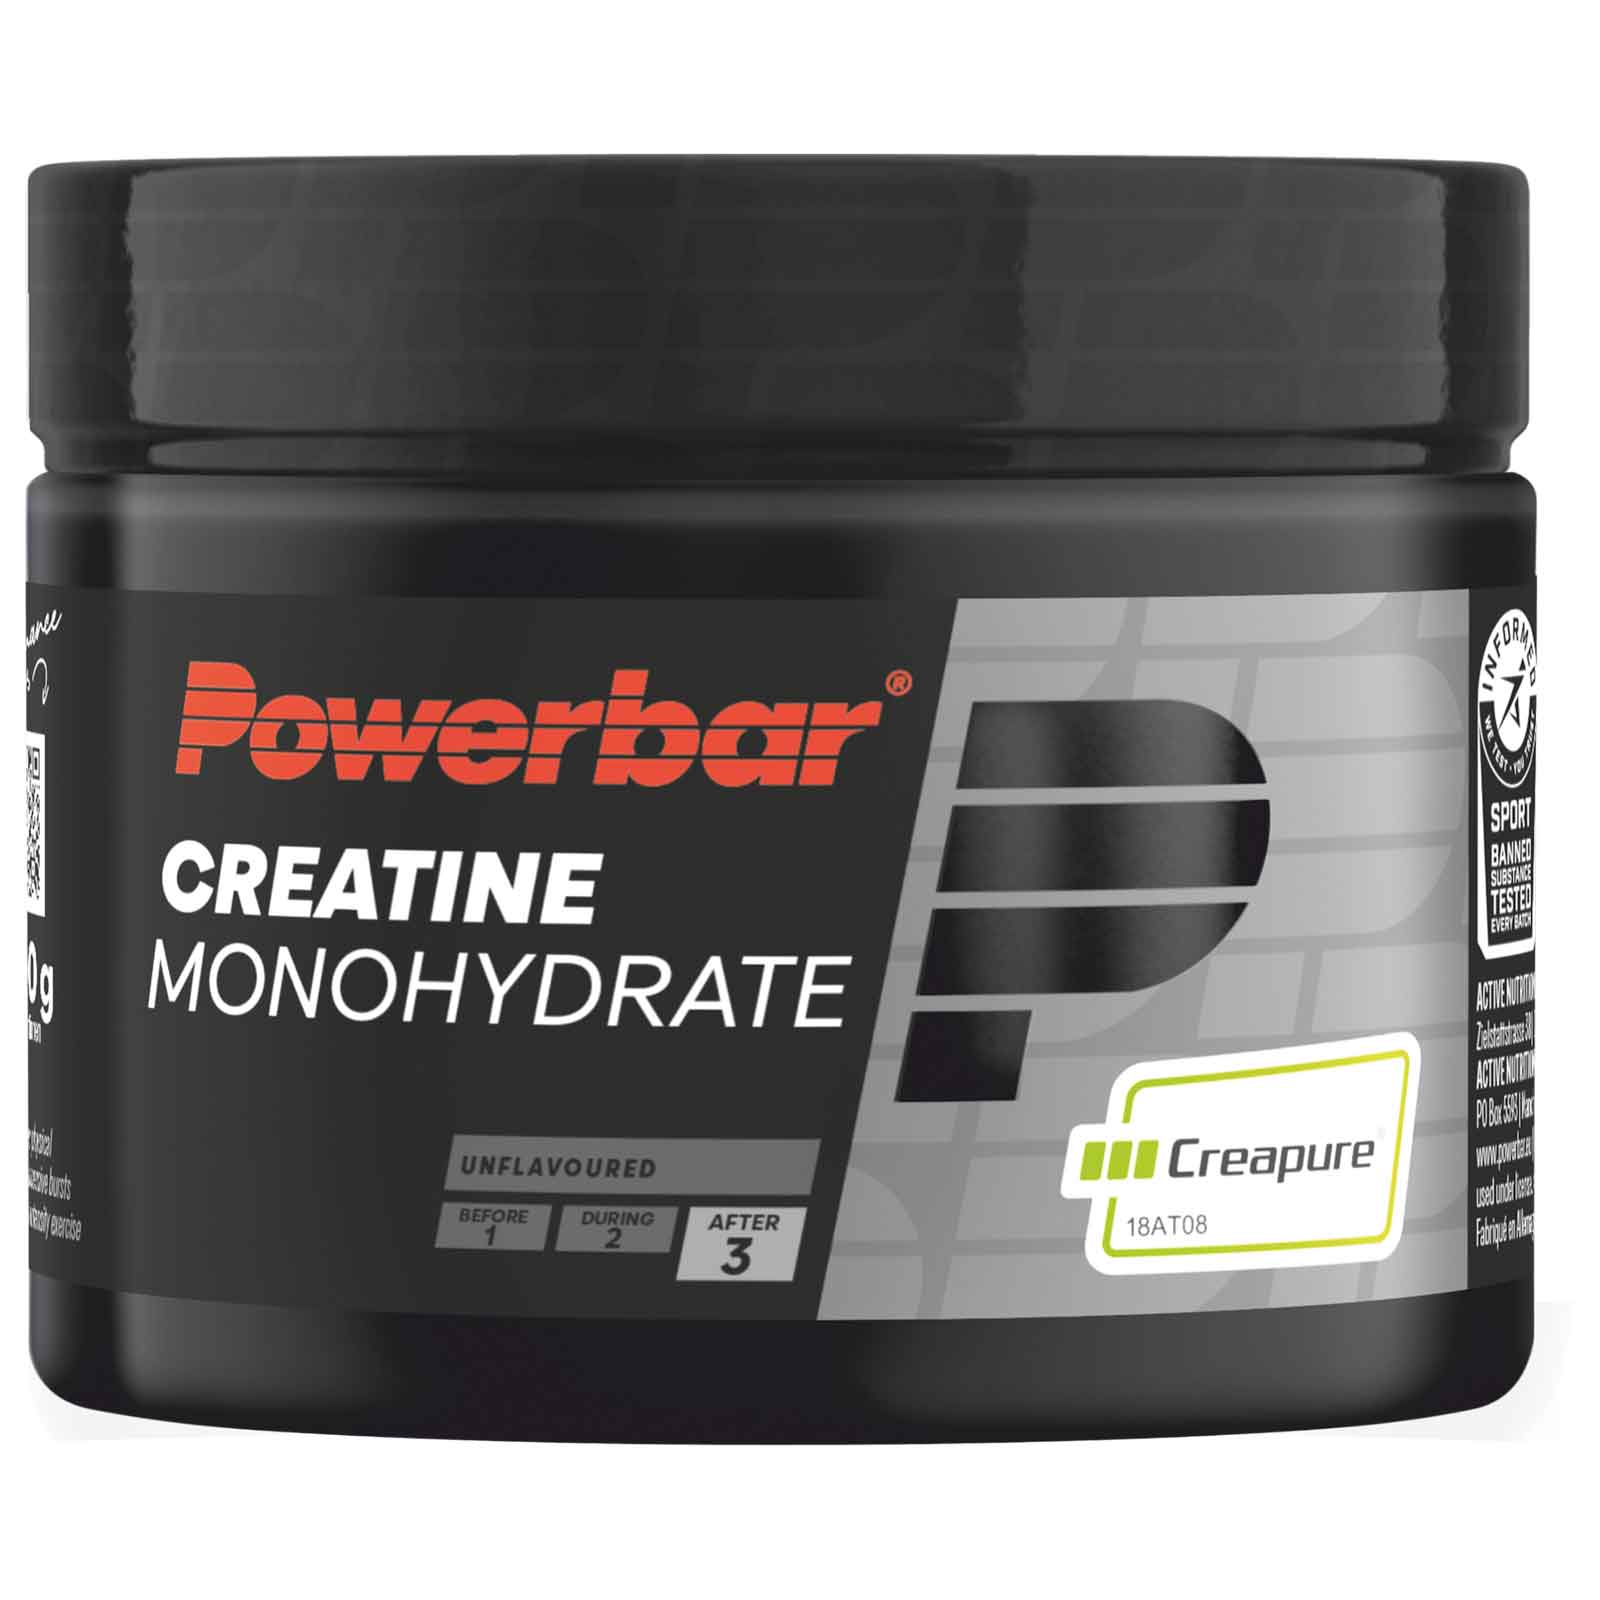 Productfoto van Powerbar Creatine Monohydrate - Voedingssupplement - 300g